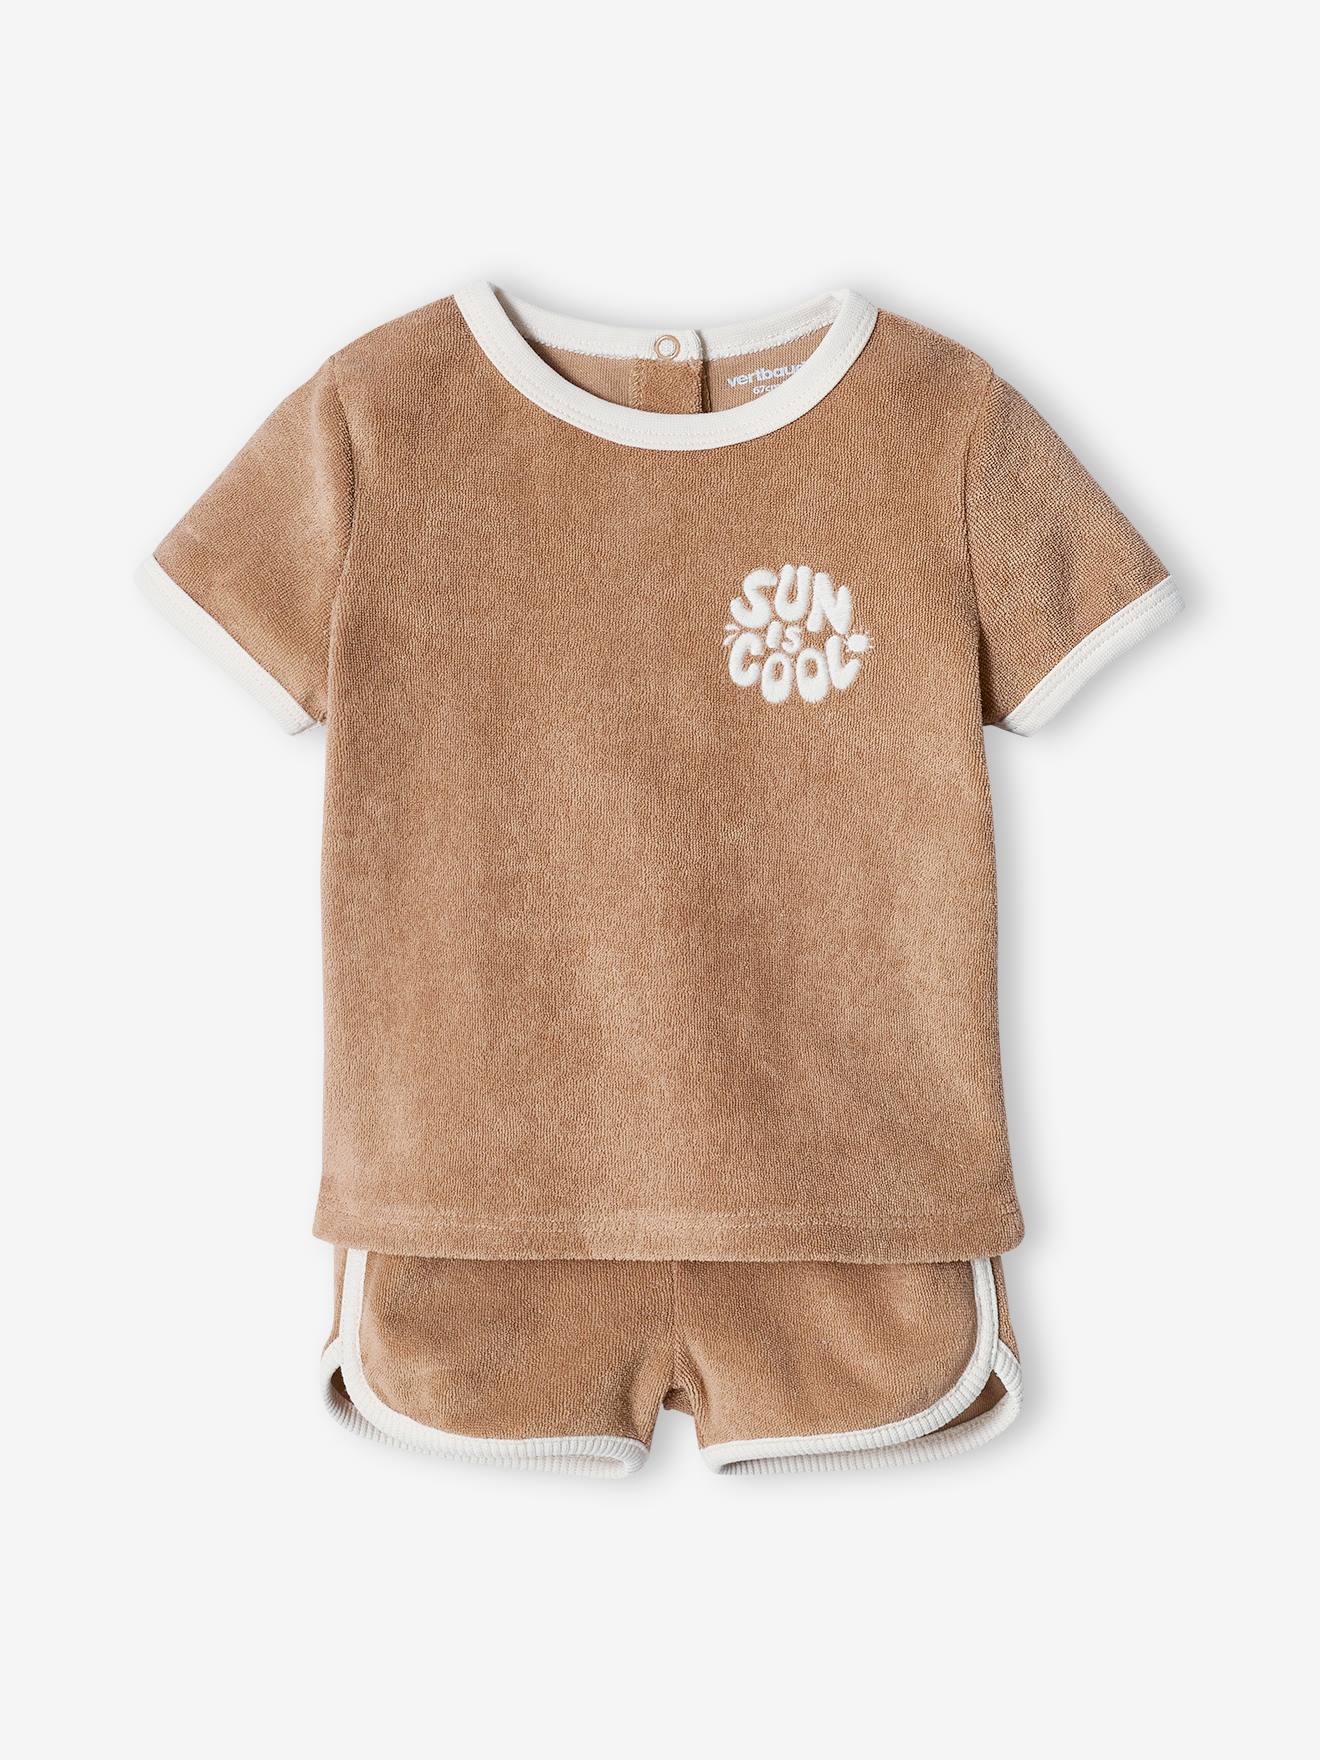 https://media.vertbaudet.com/Pictures/vertbaudet/255989/terry-cloth-shorts-t-shirt-ensemble-for-babies.jpg